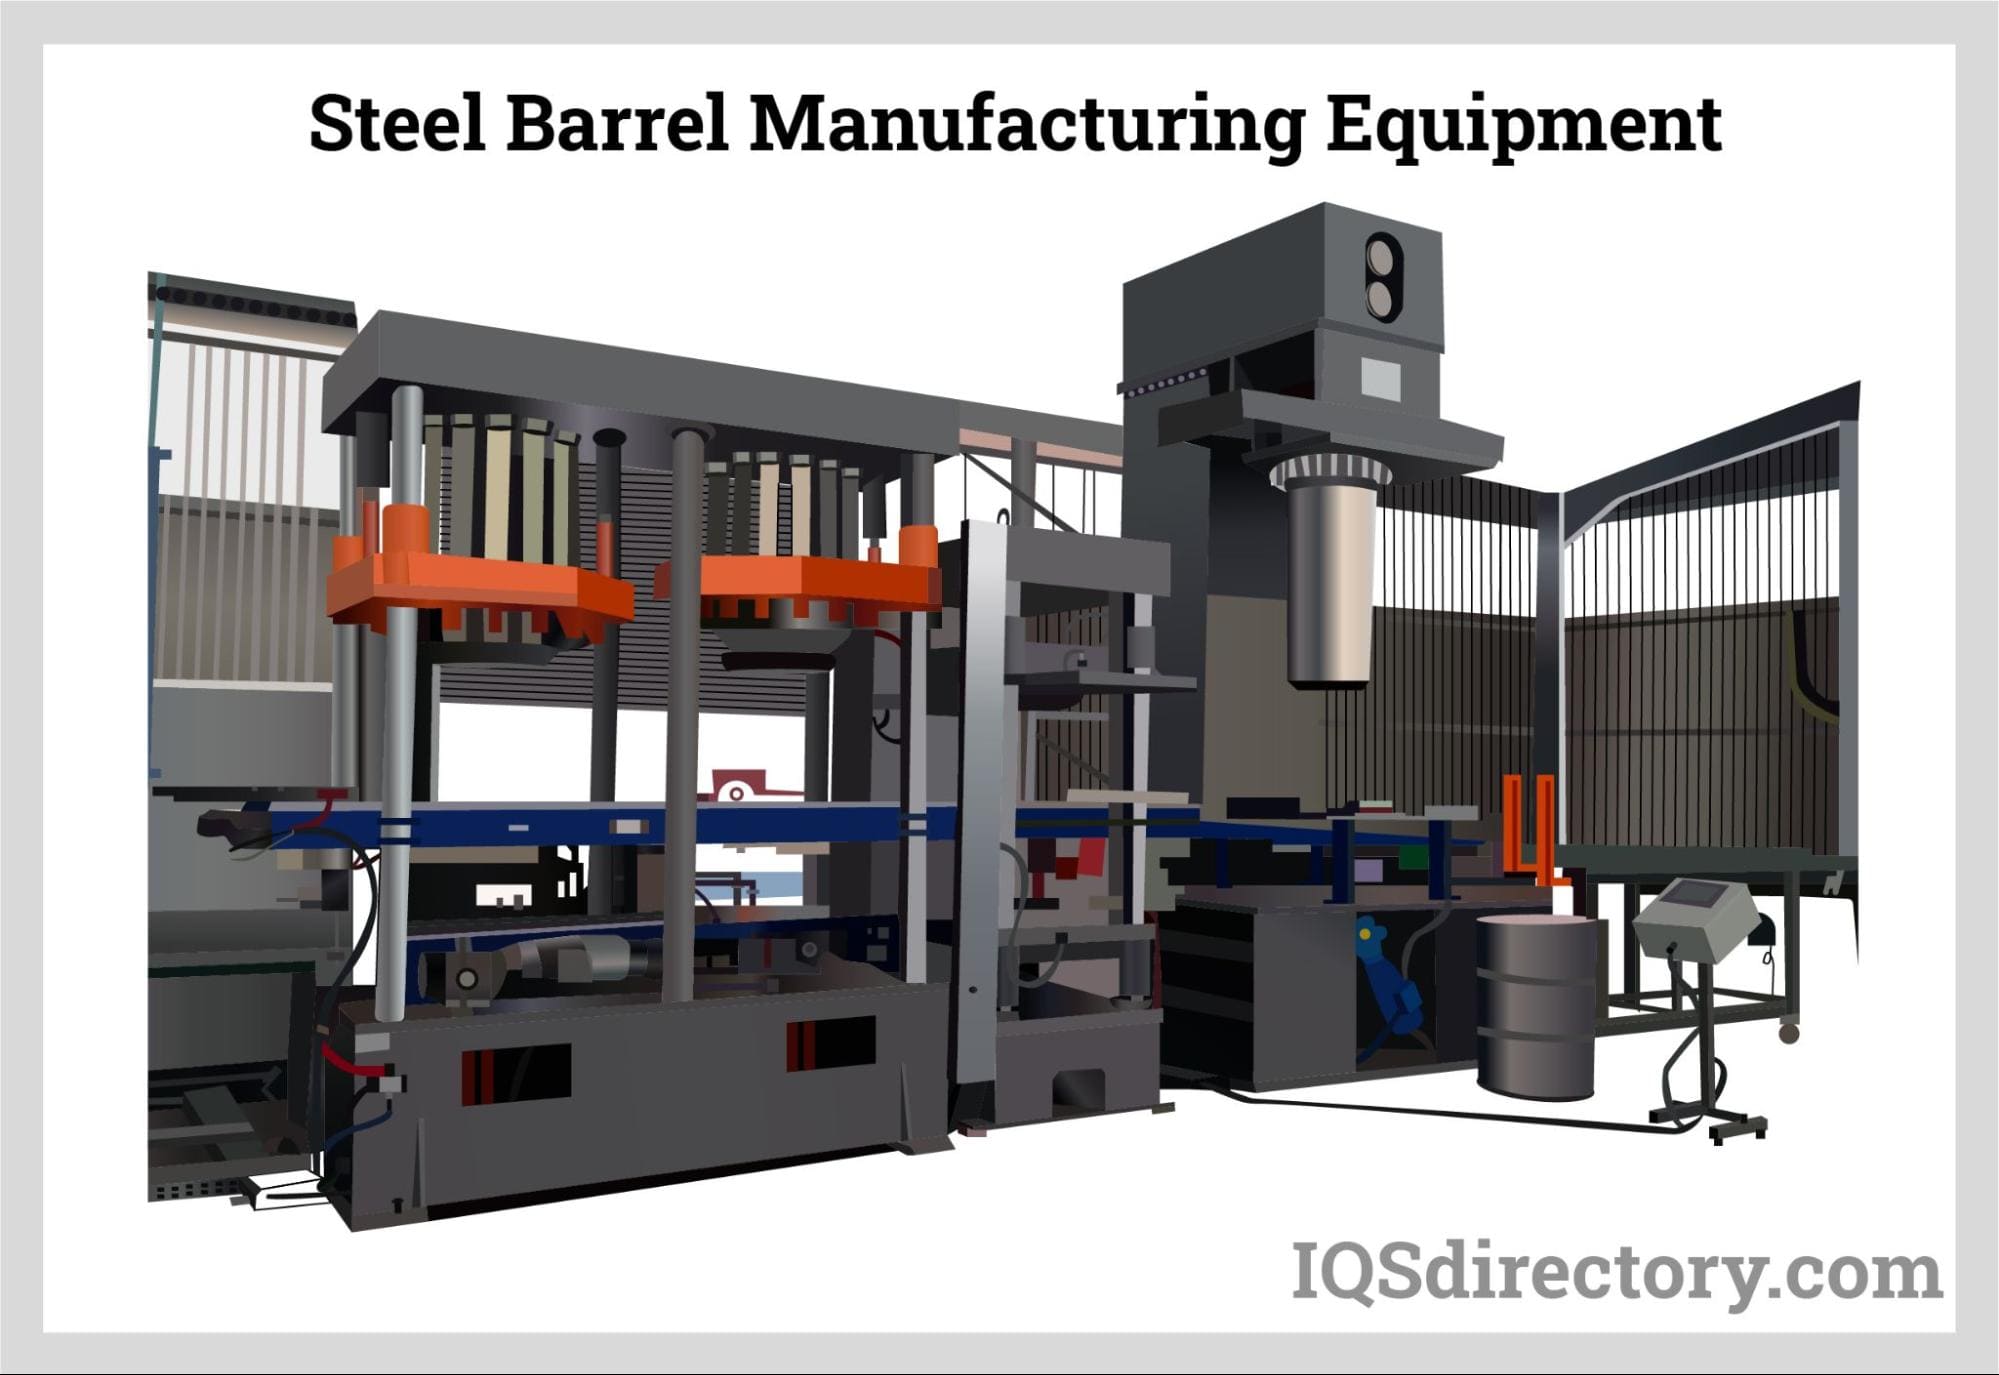 Steel Barrel Manufacturing Equipment